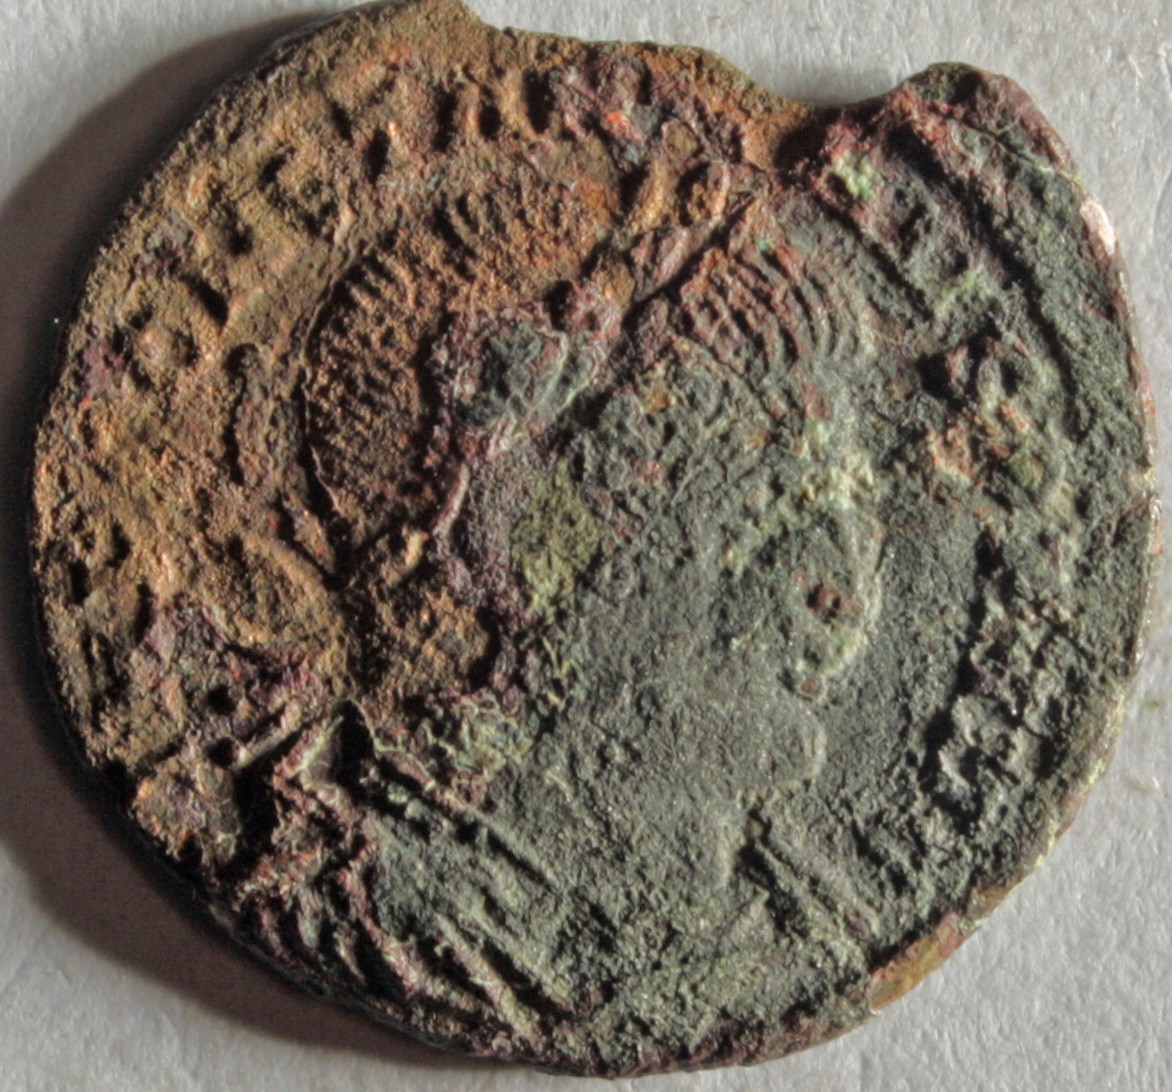 Römische Münze, Nominal Follis, Prägeherr Constantinus I., Prägeort Rom, Original (Museumsgesellschaft Bad Dürkheim e.V. CC BY-NC-SA)